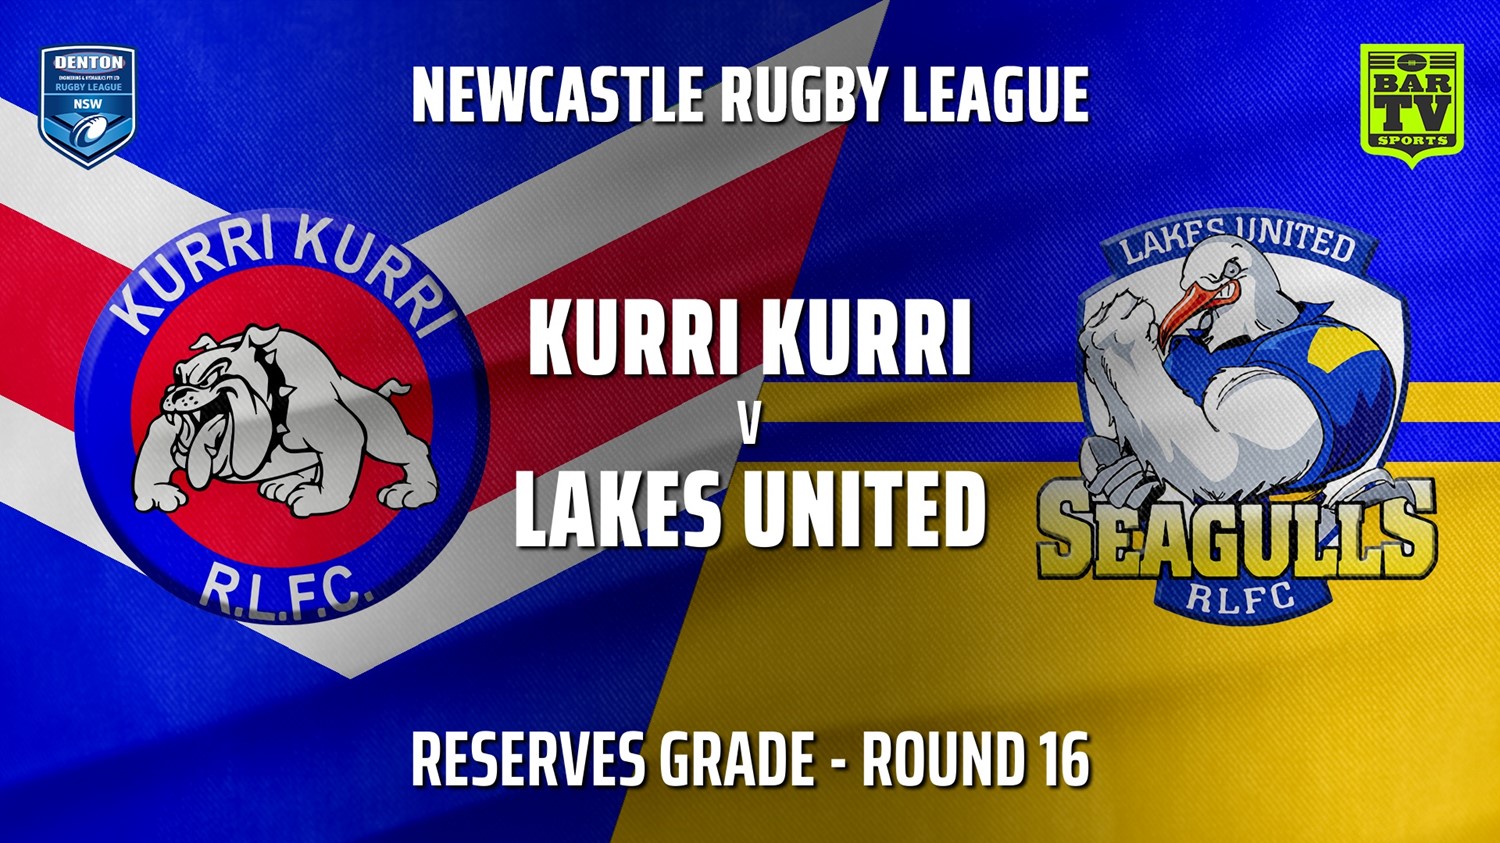 210724-Newcastle Round 16 - Reserves Grade - Kurri Kurri Bulldogs v Lakes United Slate Image